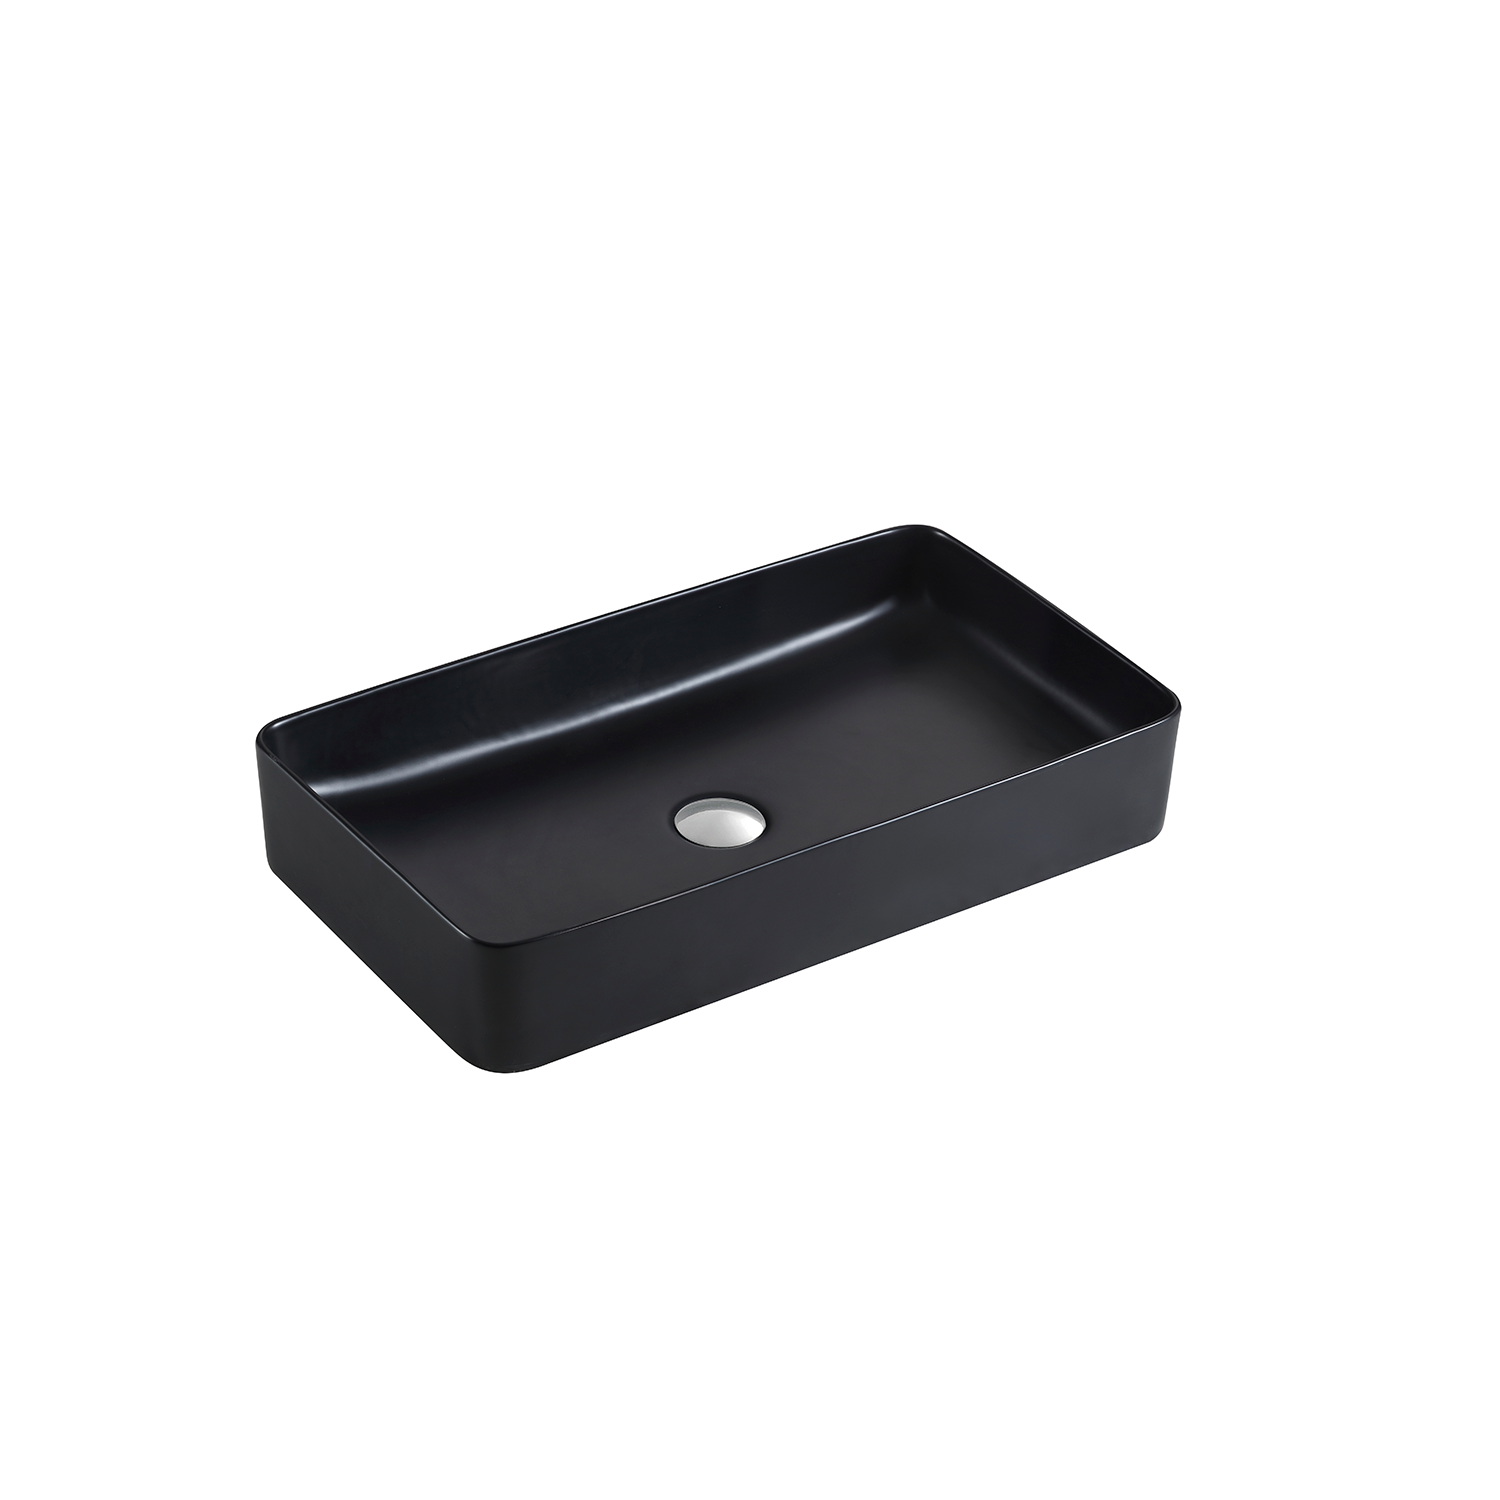 DAX  Ceramic Rectangle Bathroom Vessel Basin- (24" x 13.5")(DAX-CL1320)